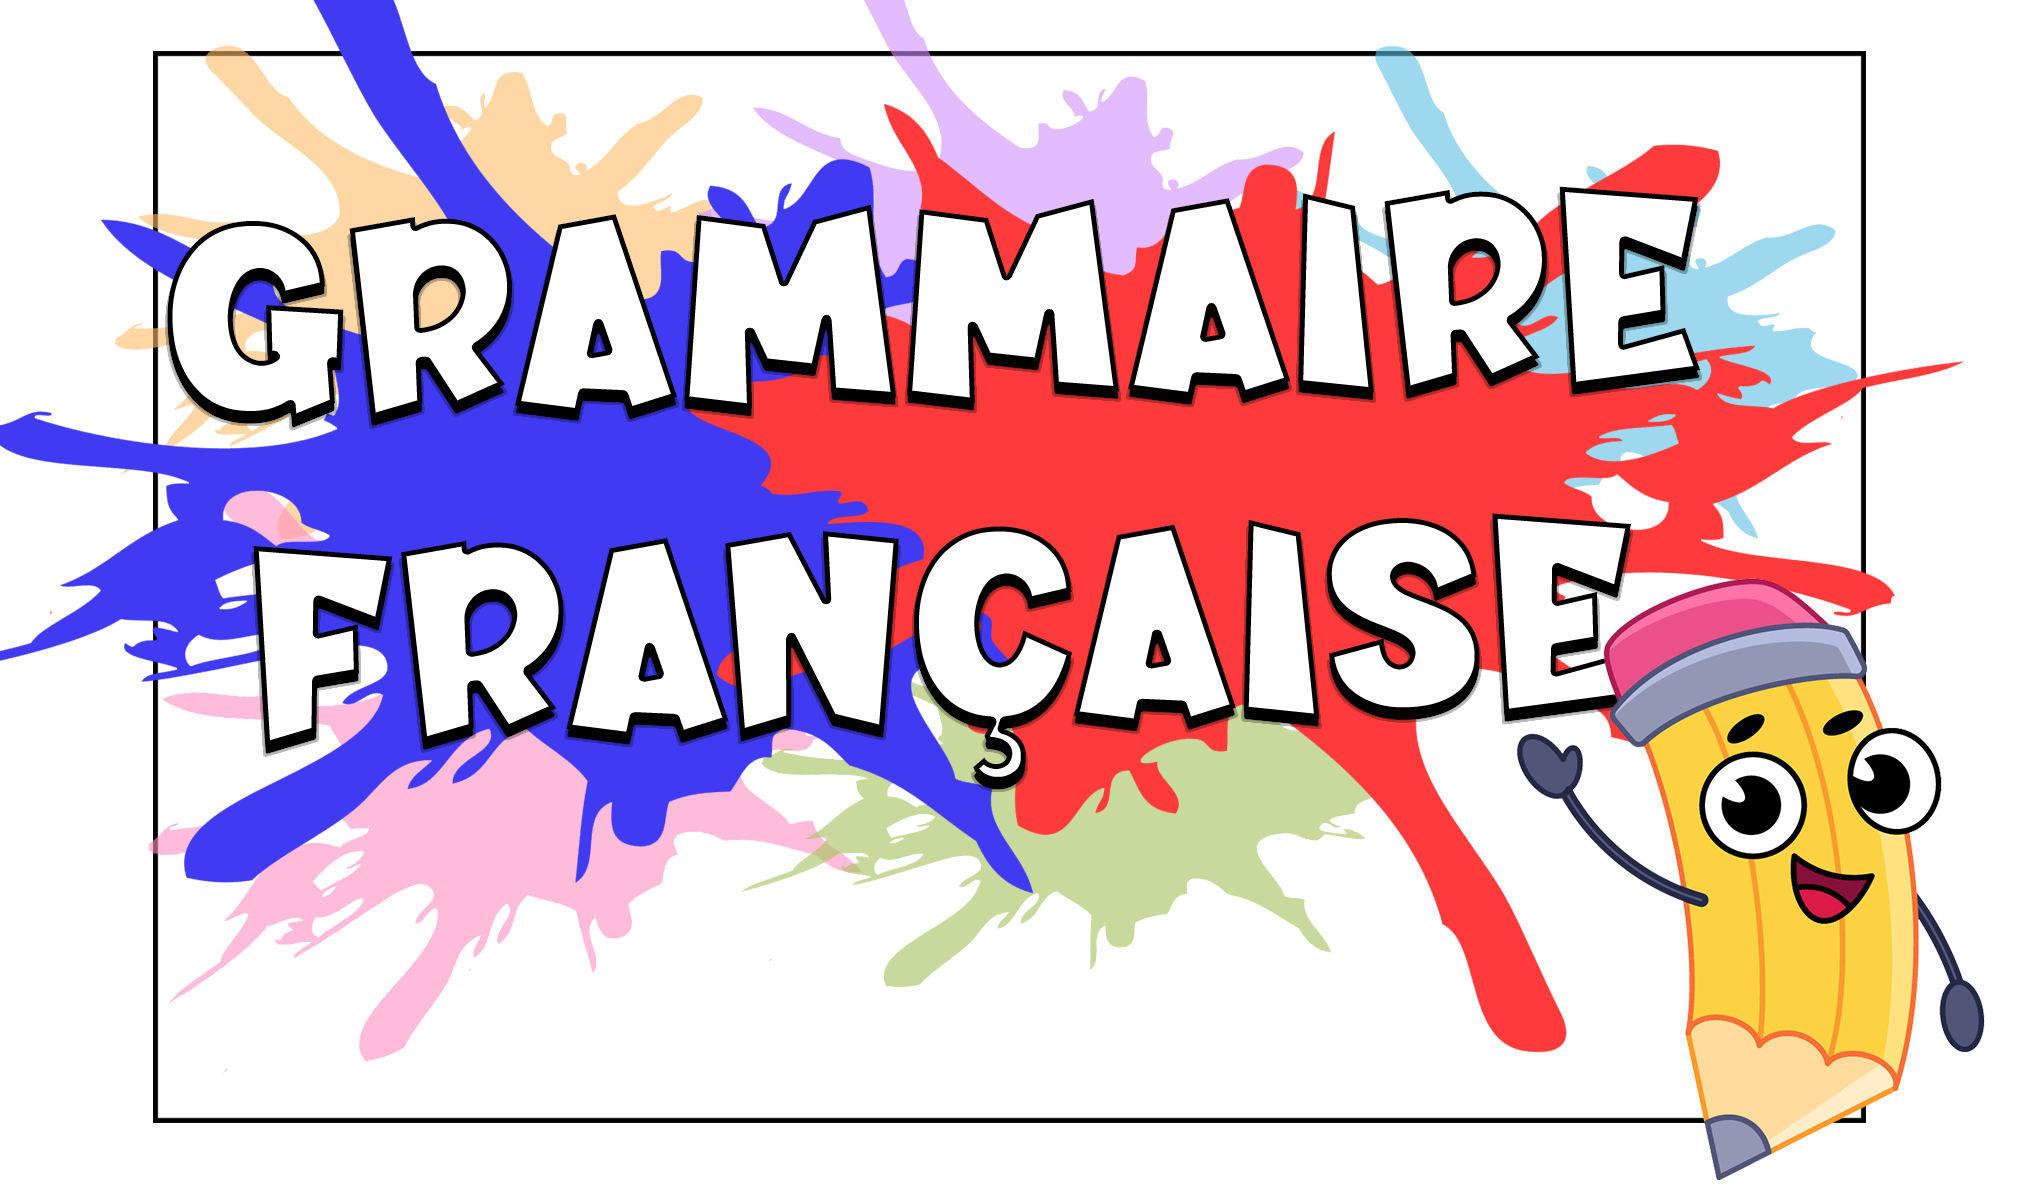 Gramática francesa